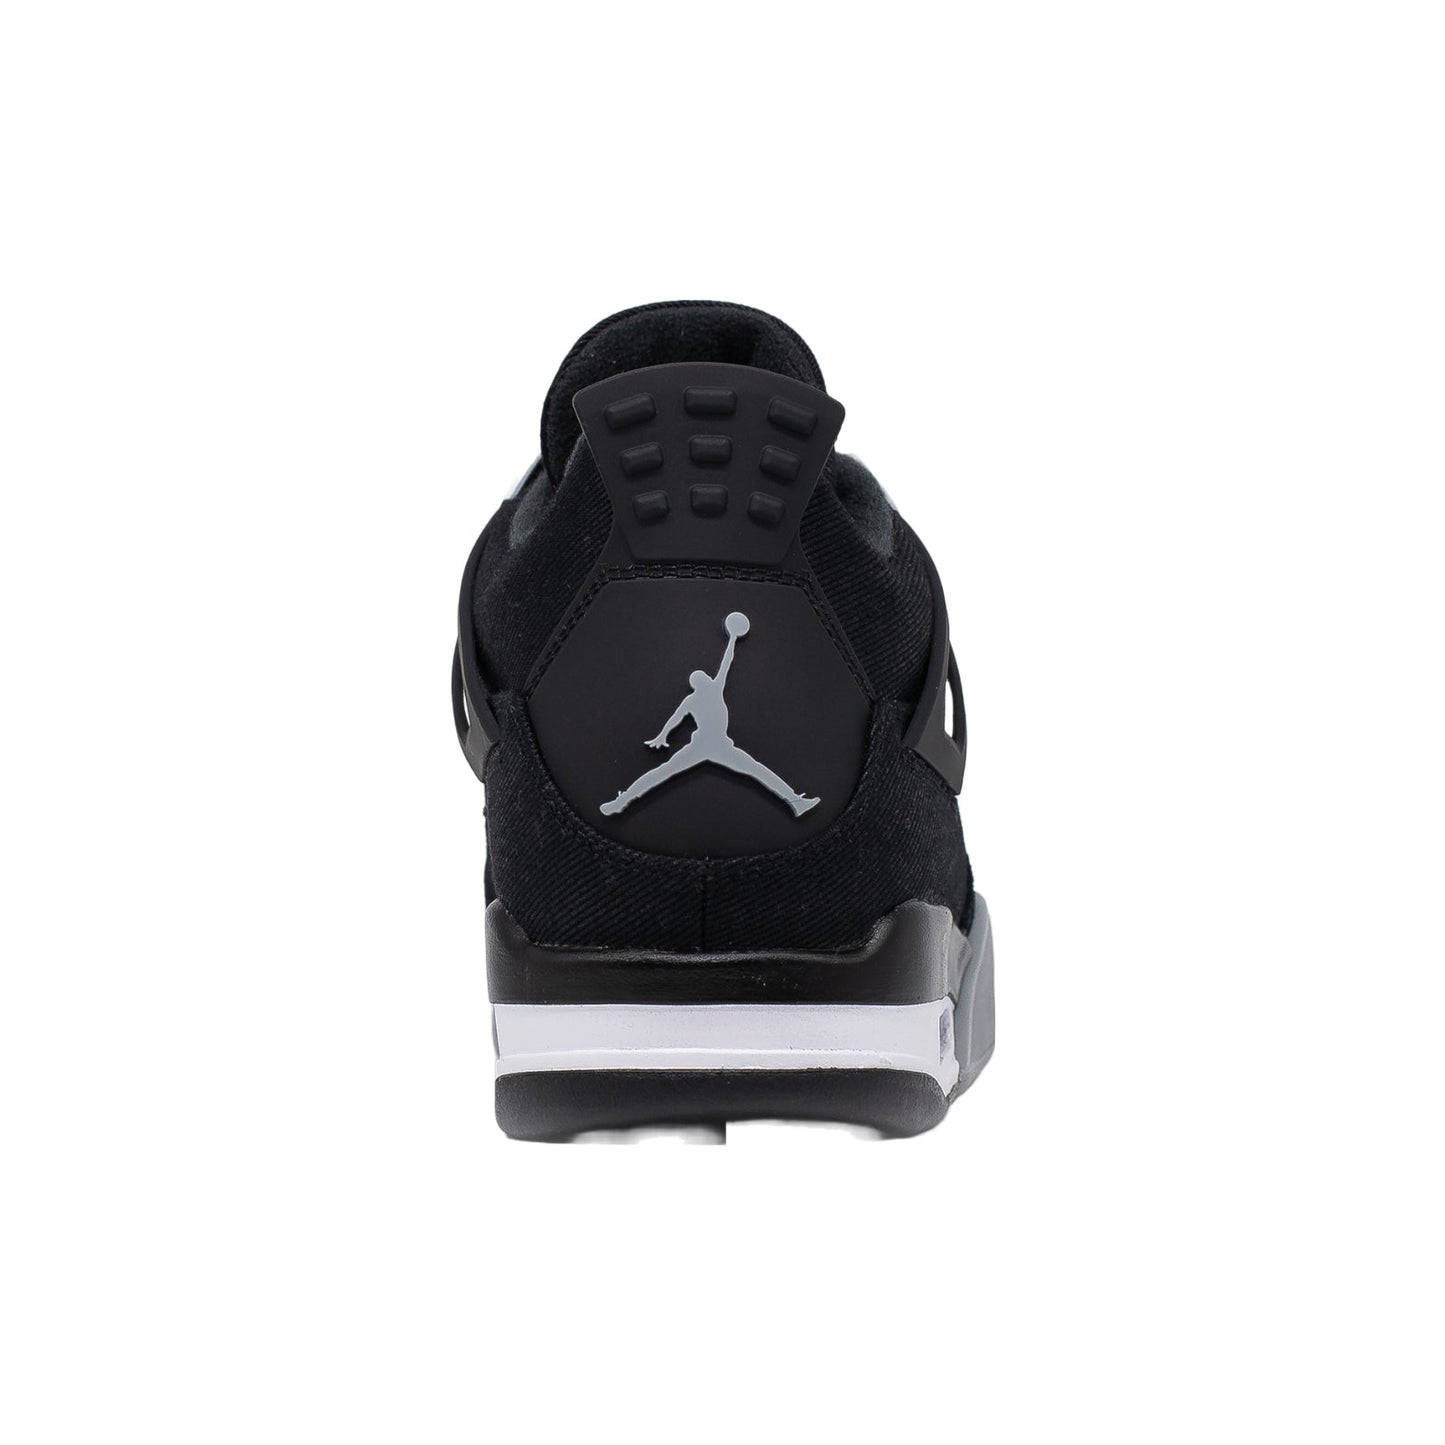 Air Jordan 4, Black Canvas